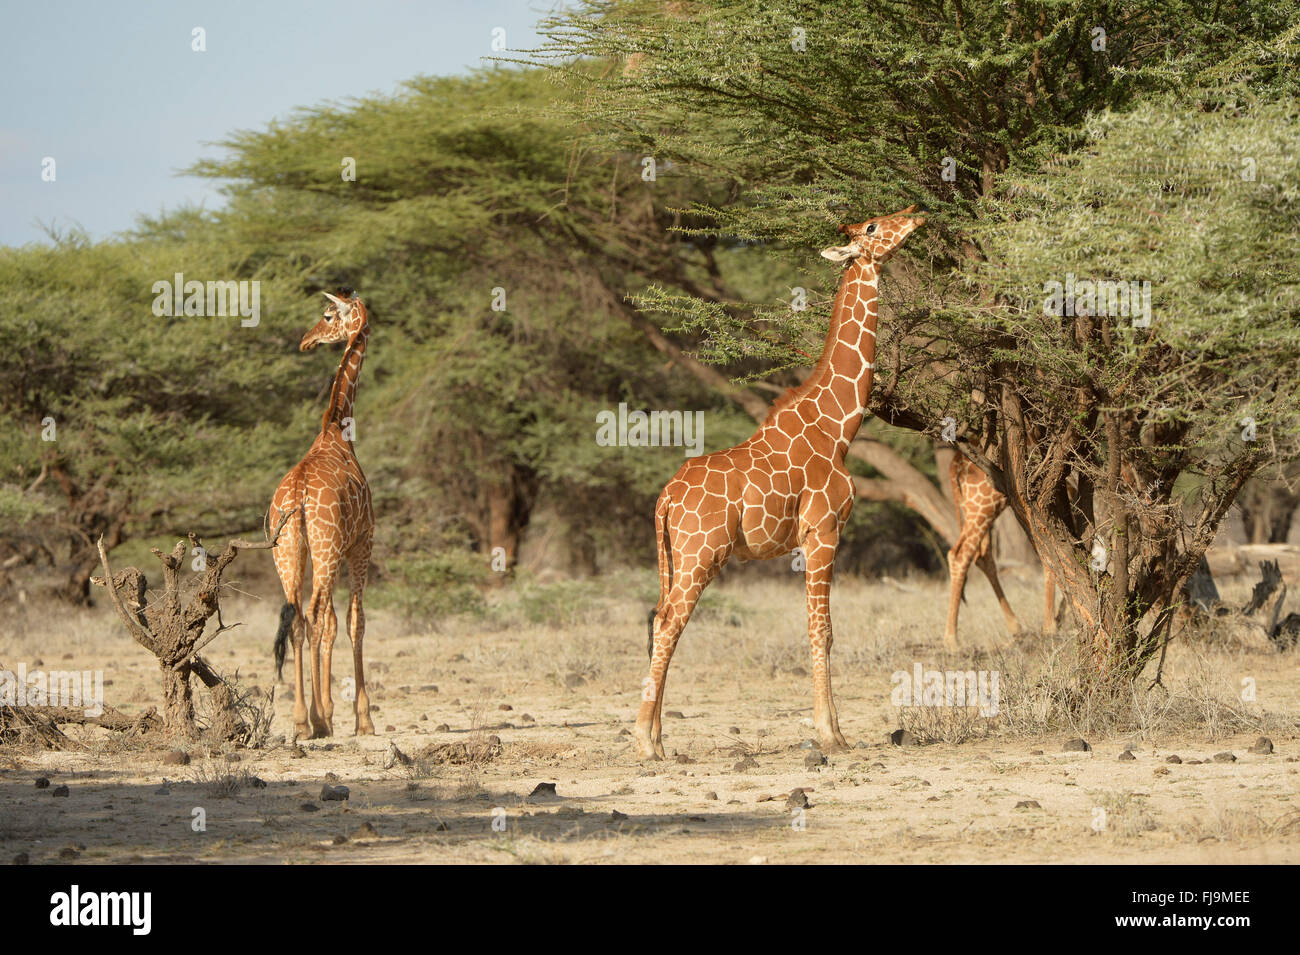 Netzartige Giraffe (Giraffa Plancius Reticulata) Fütterung auf Akazie Bäume, Shaba National Reserve, Kenia, Oktober Stockfoto